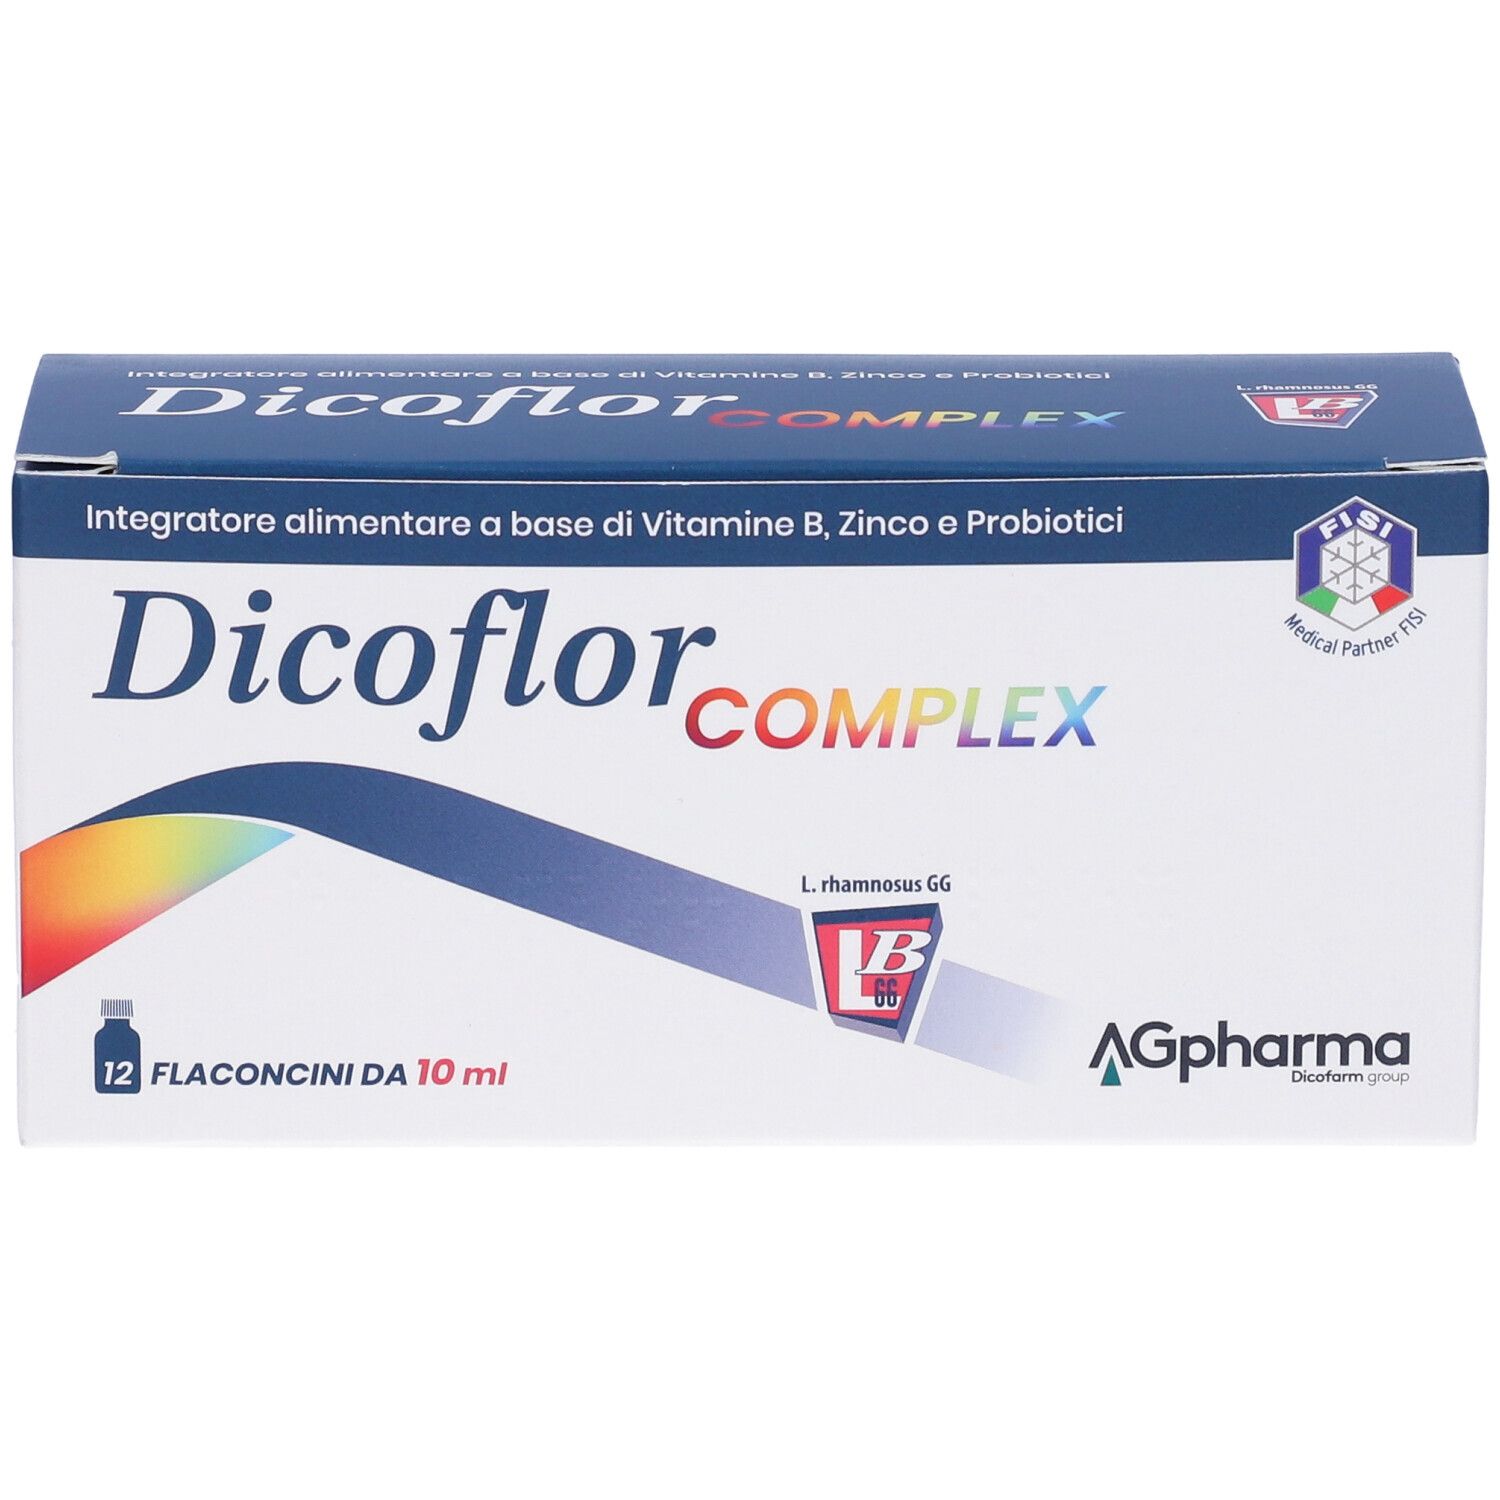 AGpharma Dicoflor Complex